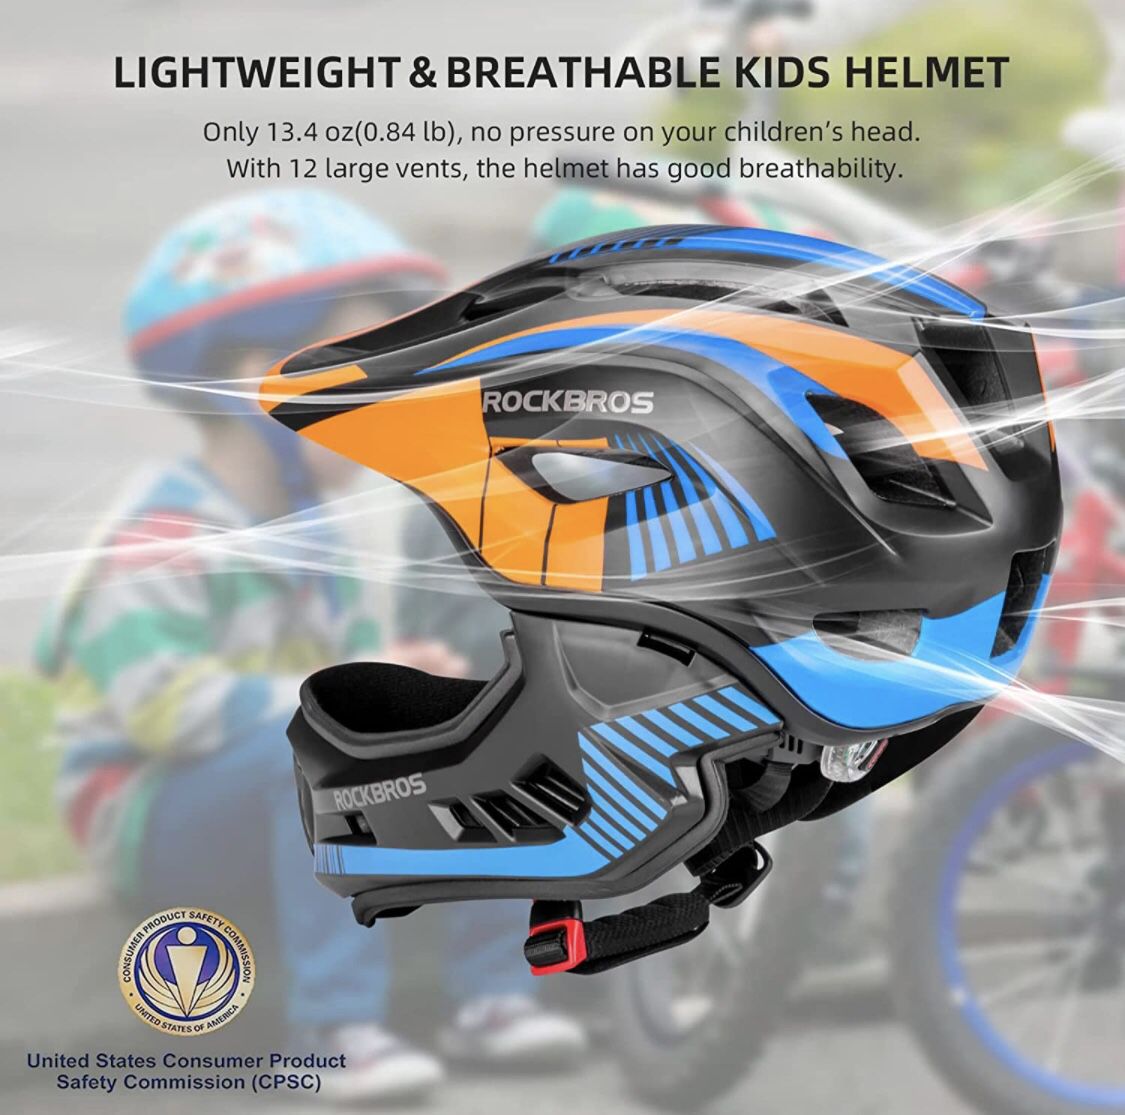 Kids' bike helmets